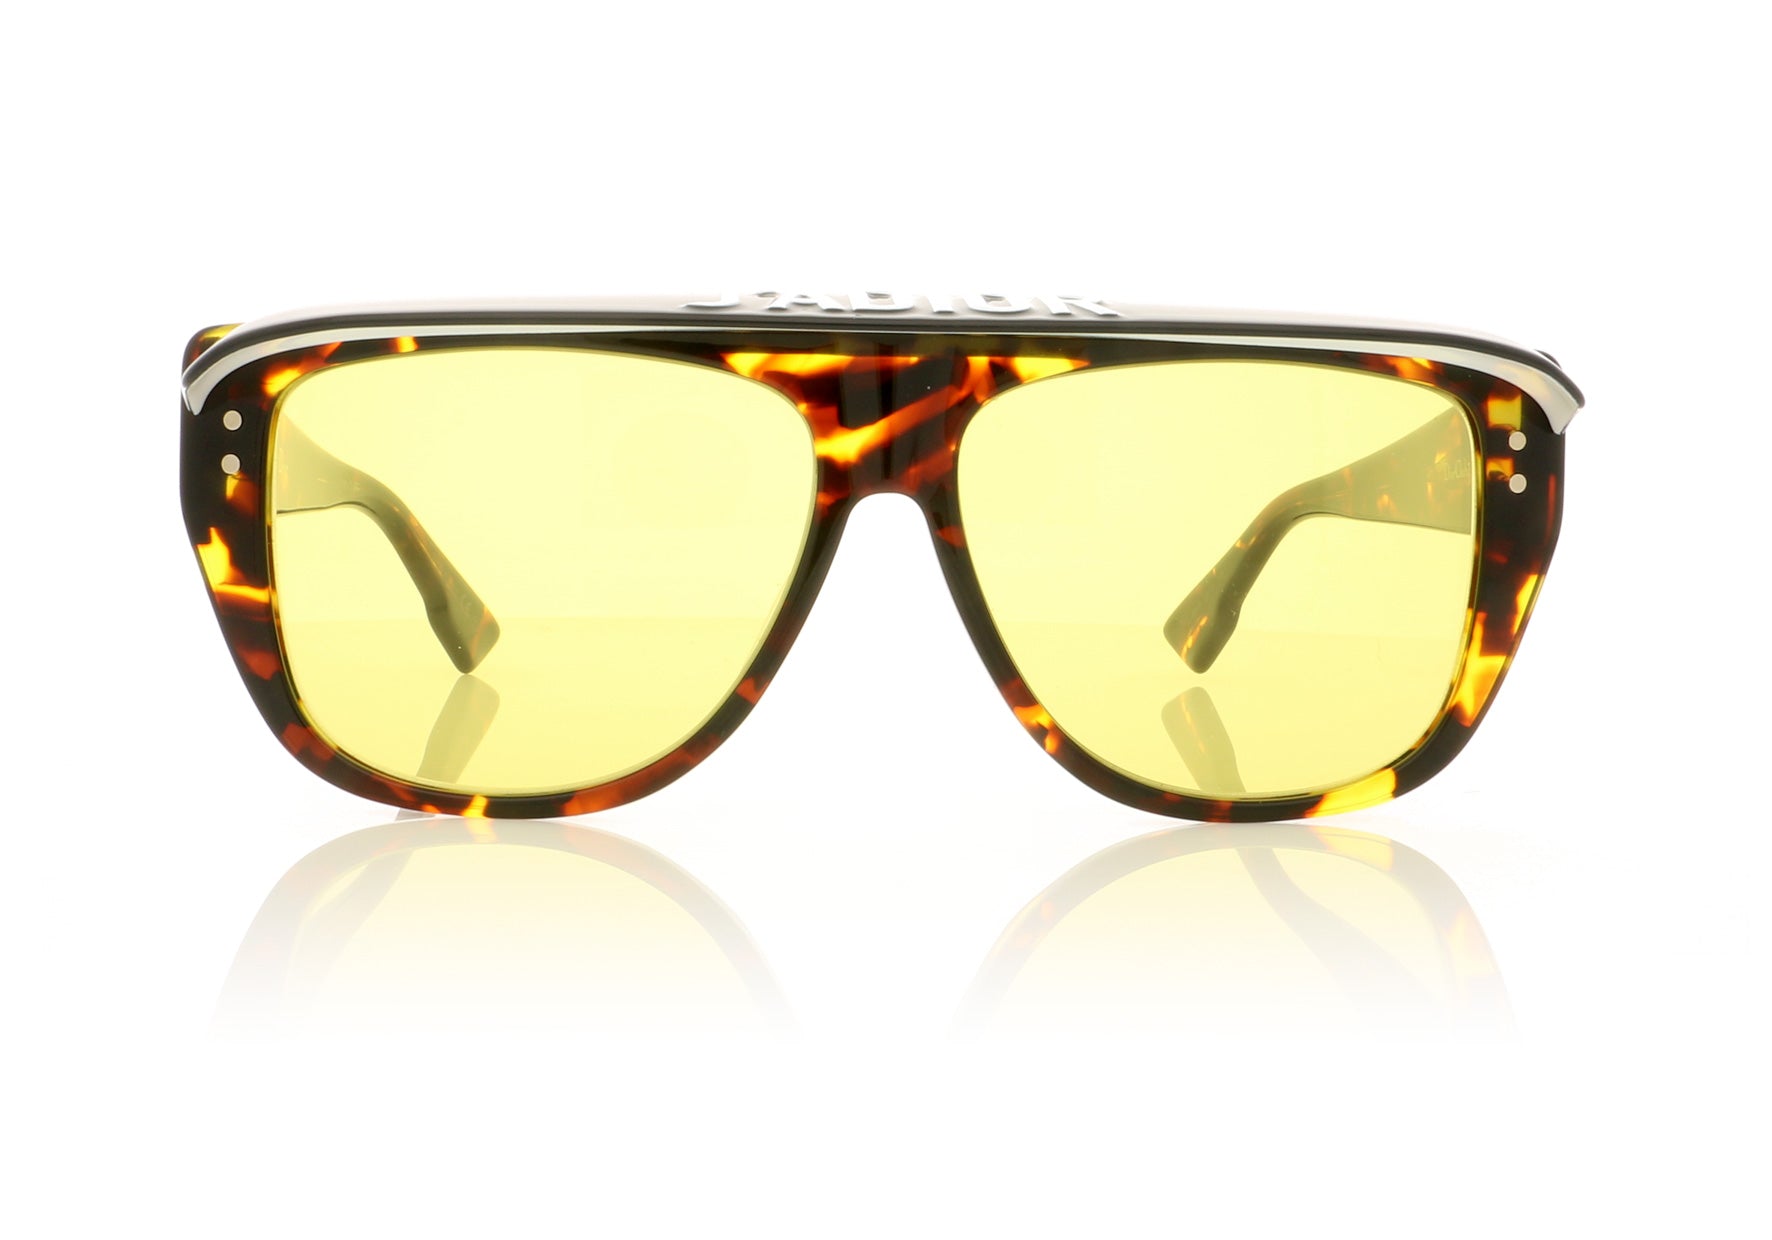 dior club 2 sunglasses